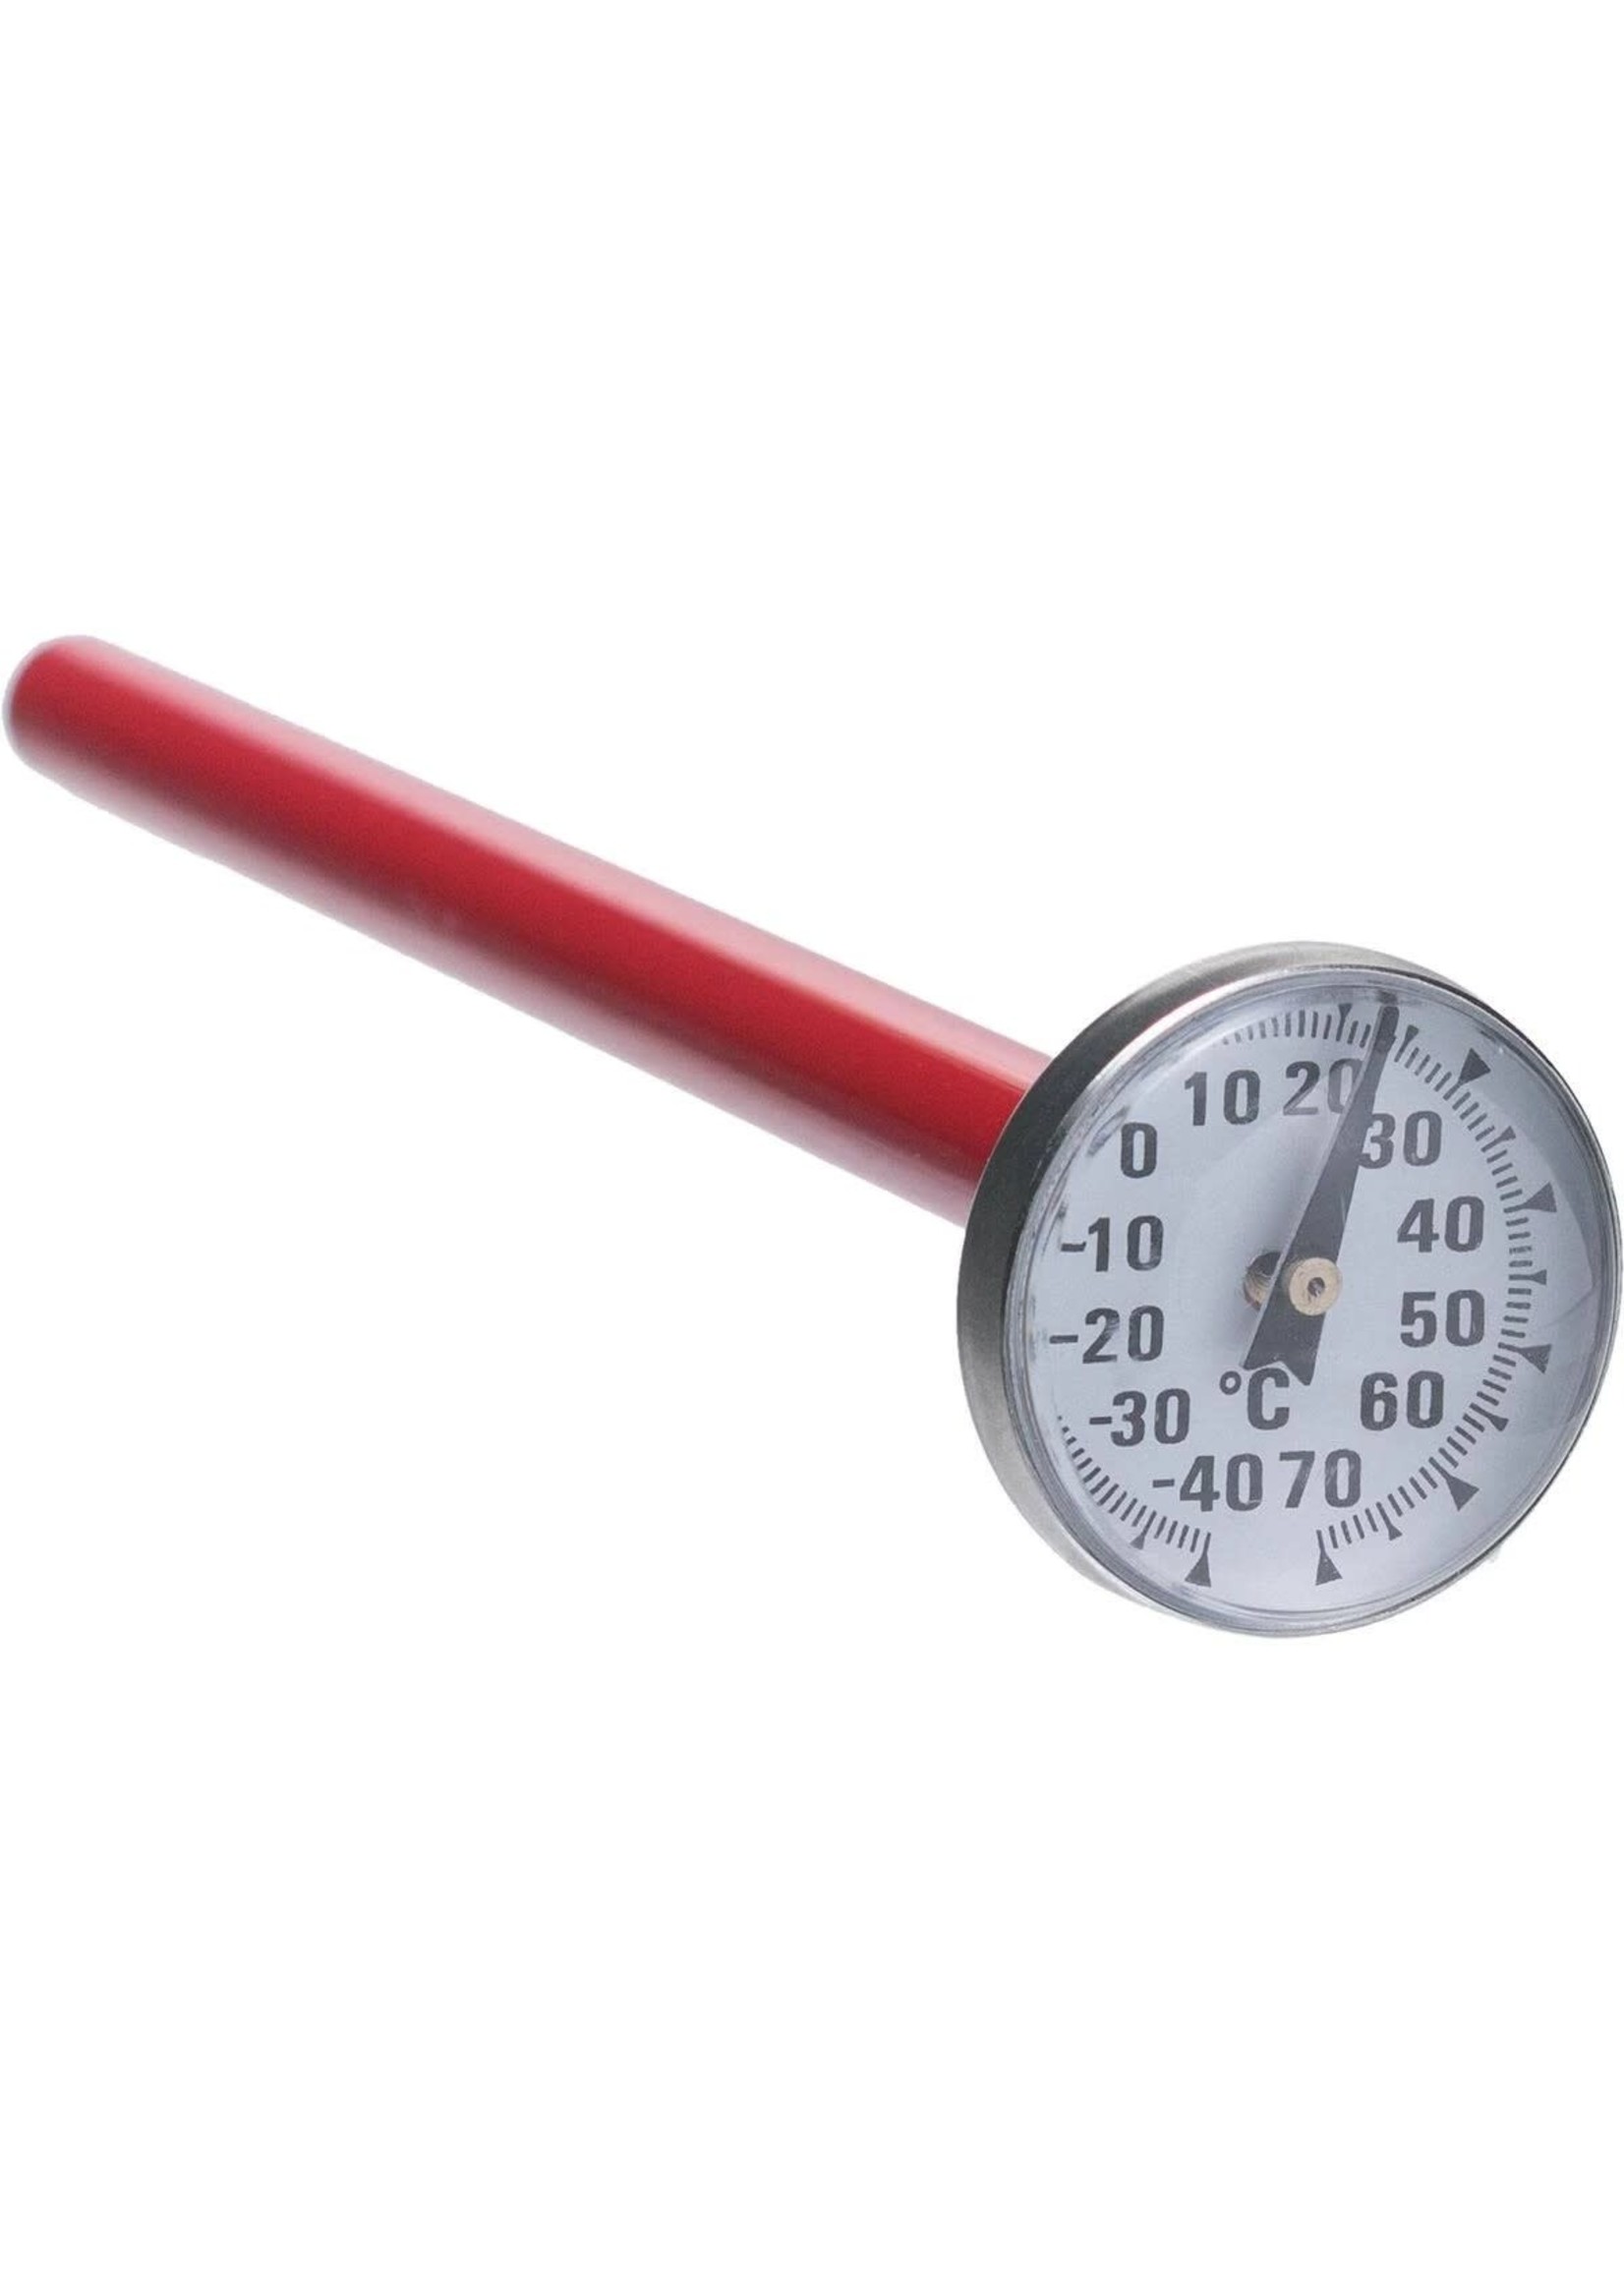 BCA Thermometer Analog